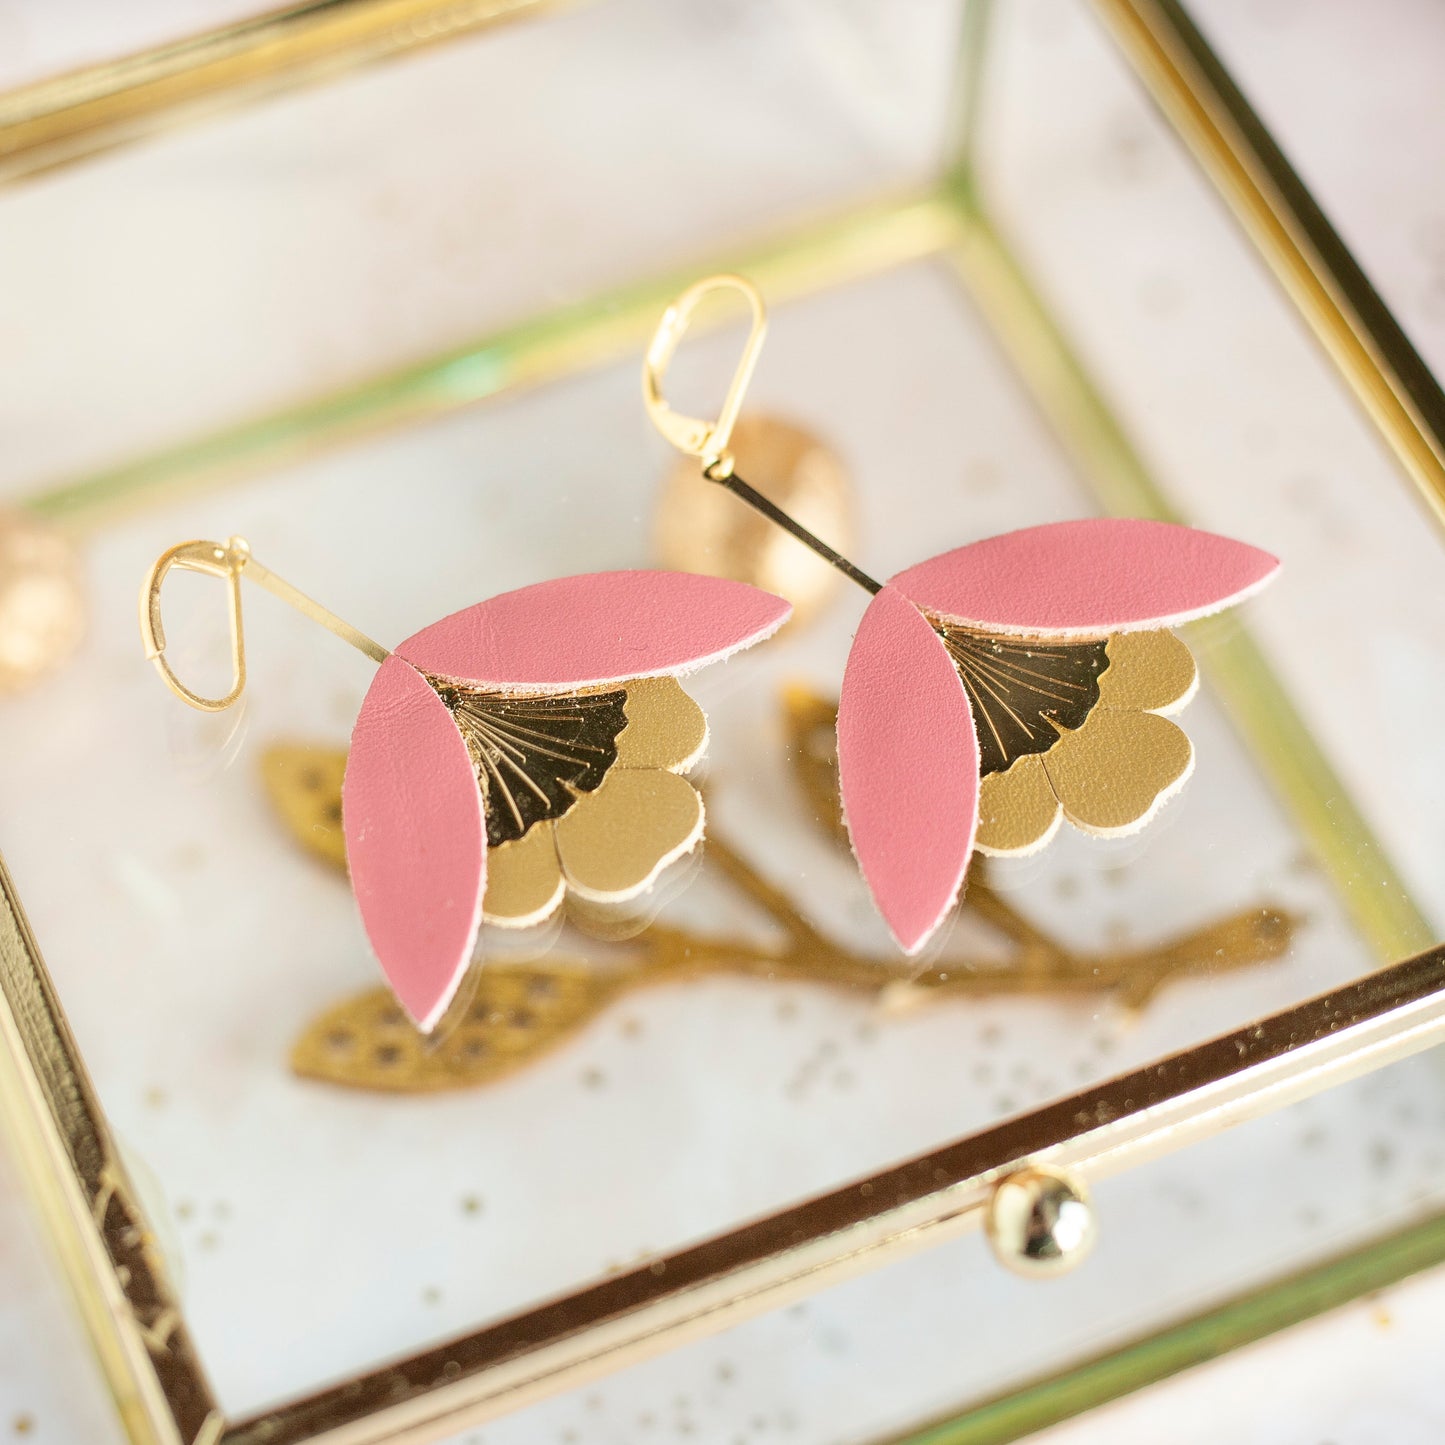 Ginkgo Flower earrings in pink and bronze flower leather